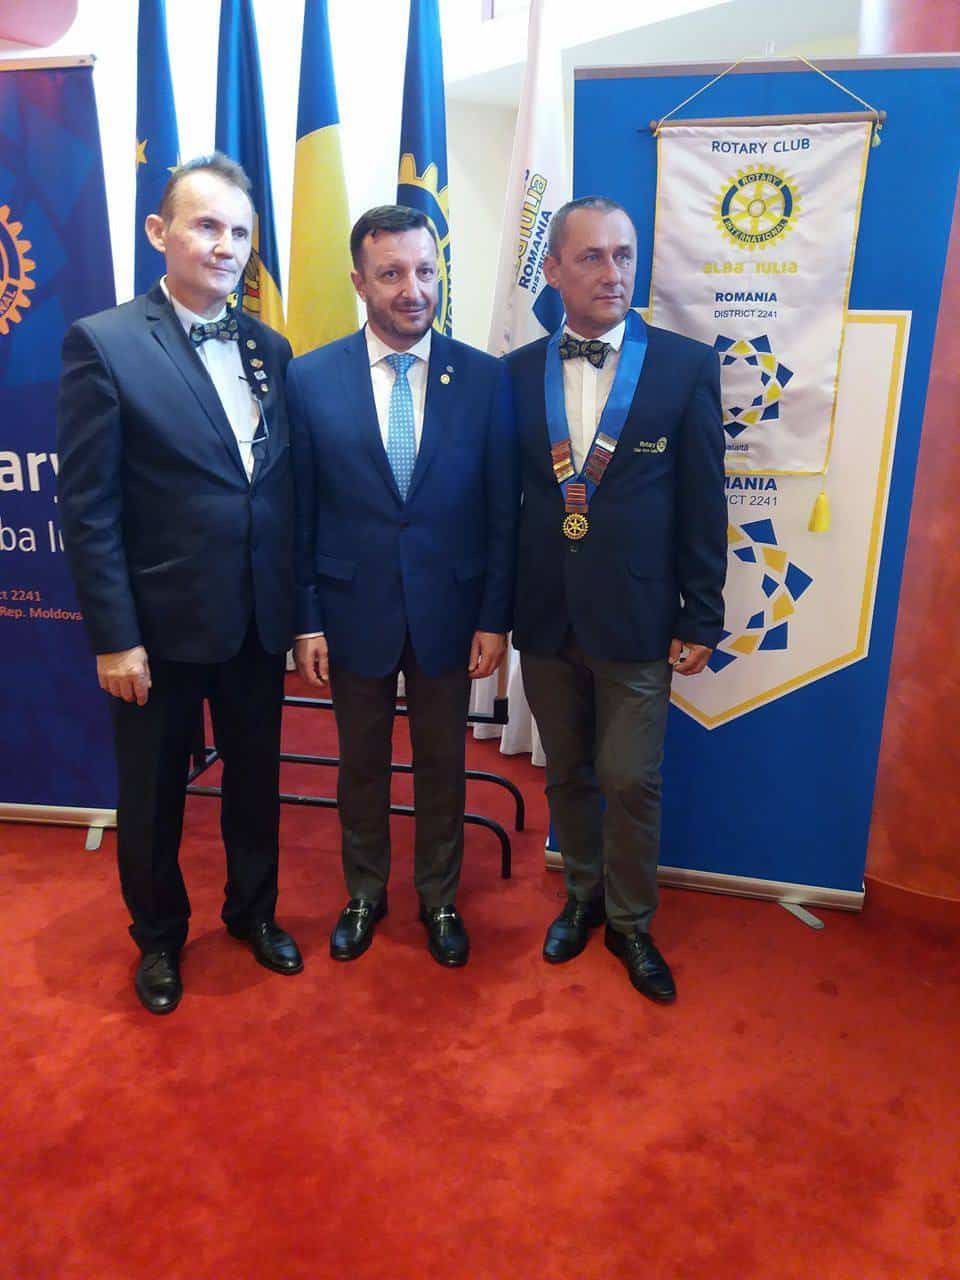 Rotary Club - Rotary Club Cluj-Napoca, Romania